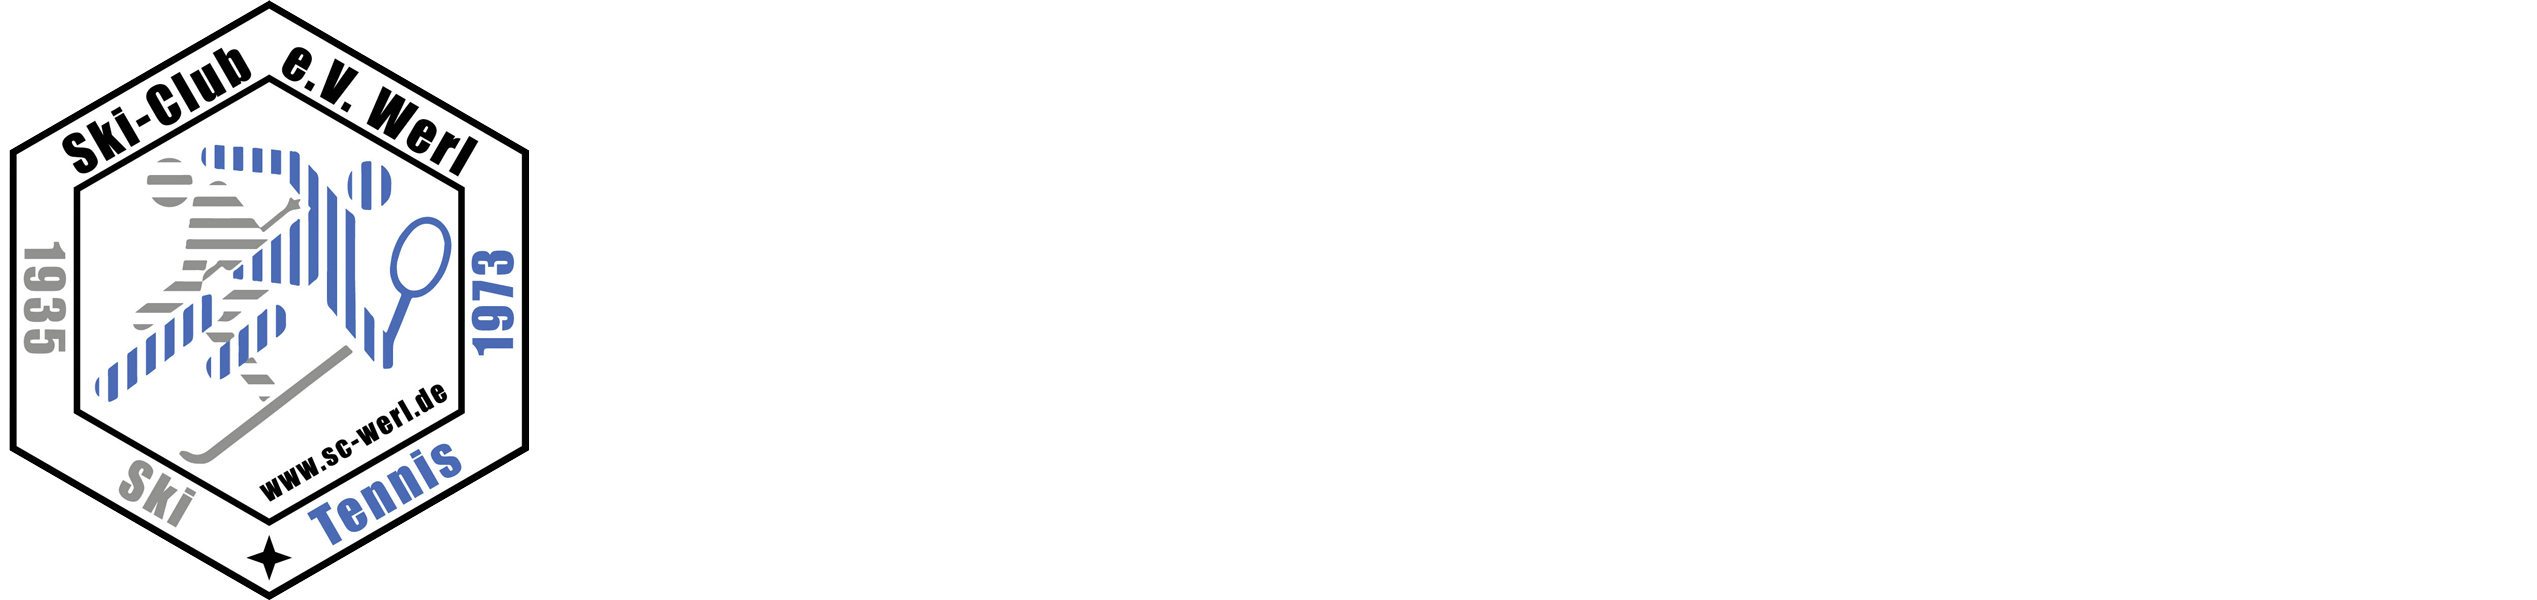 Ski Club e. V. Werl